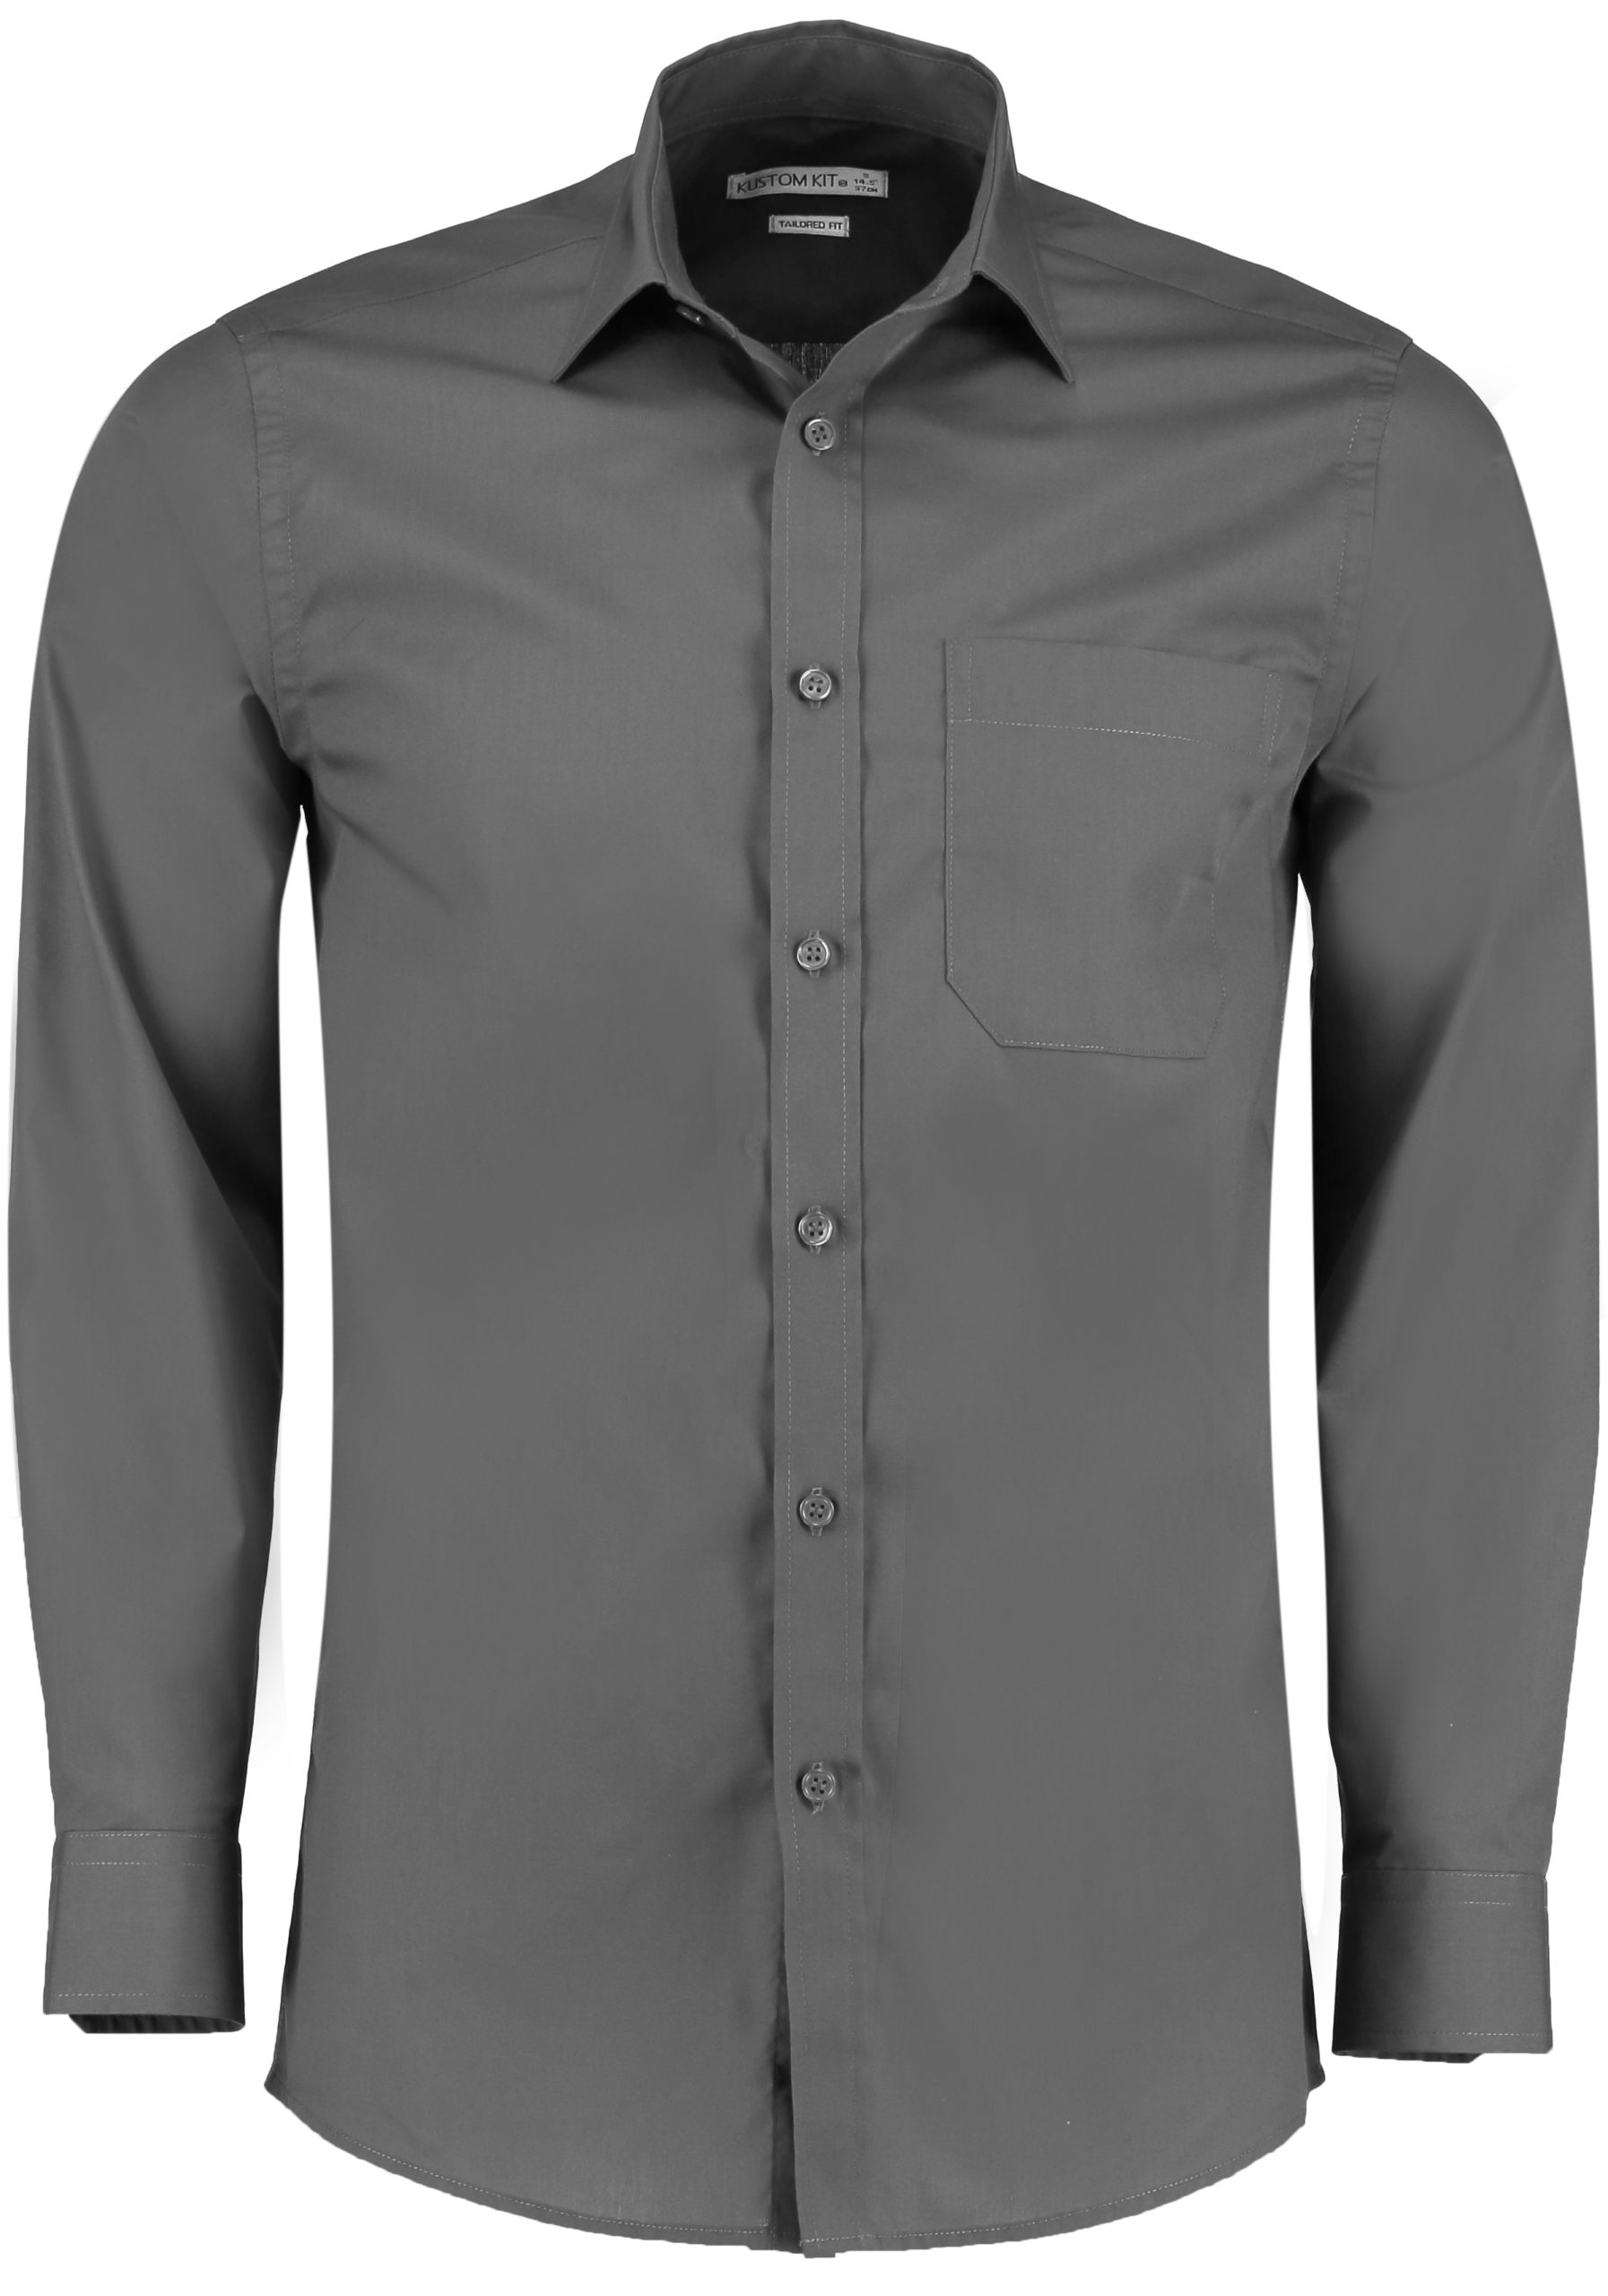 Kustom Kit Long Sleeved Shirt - Essential Workwear